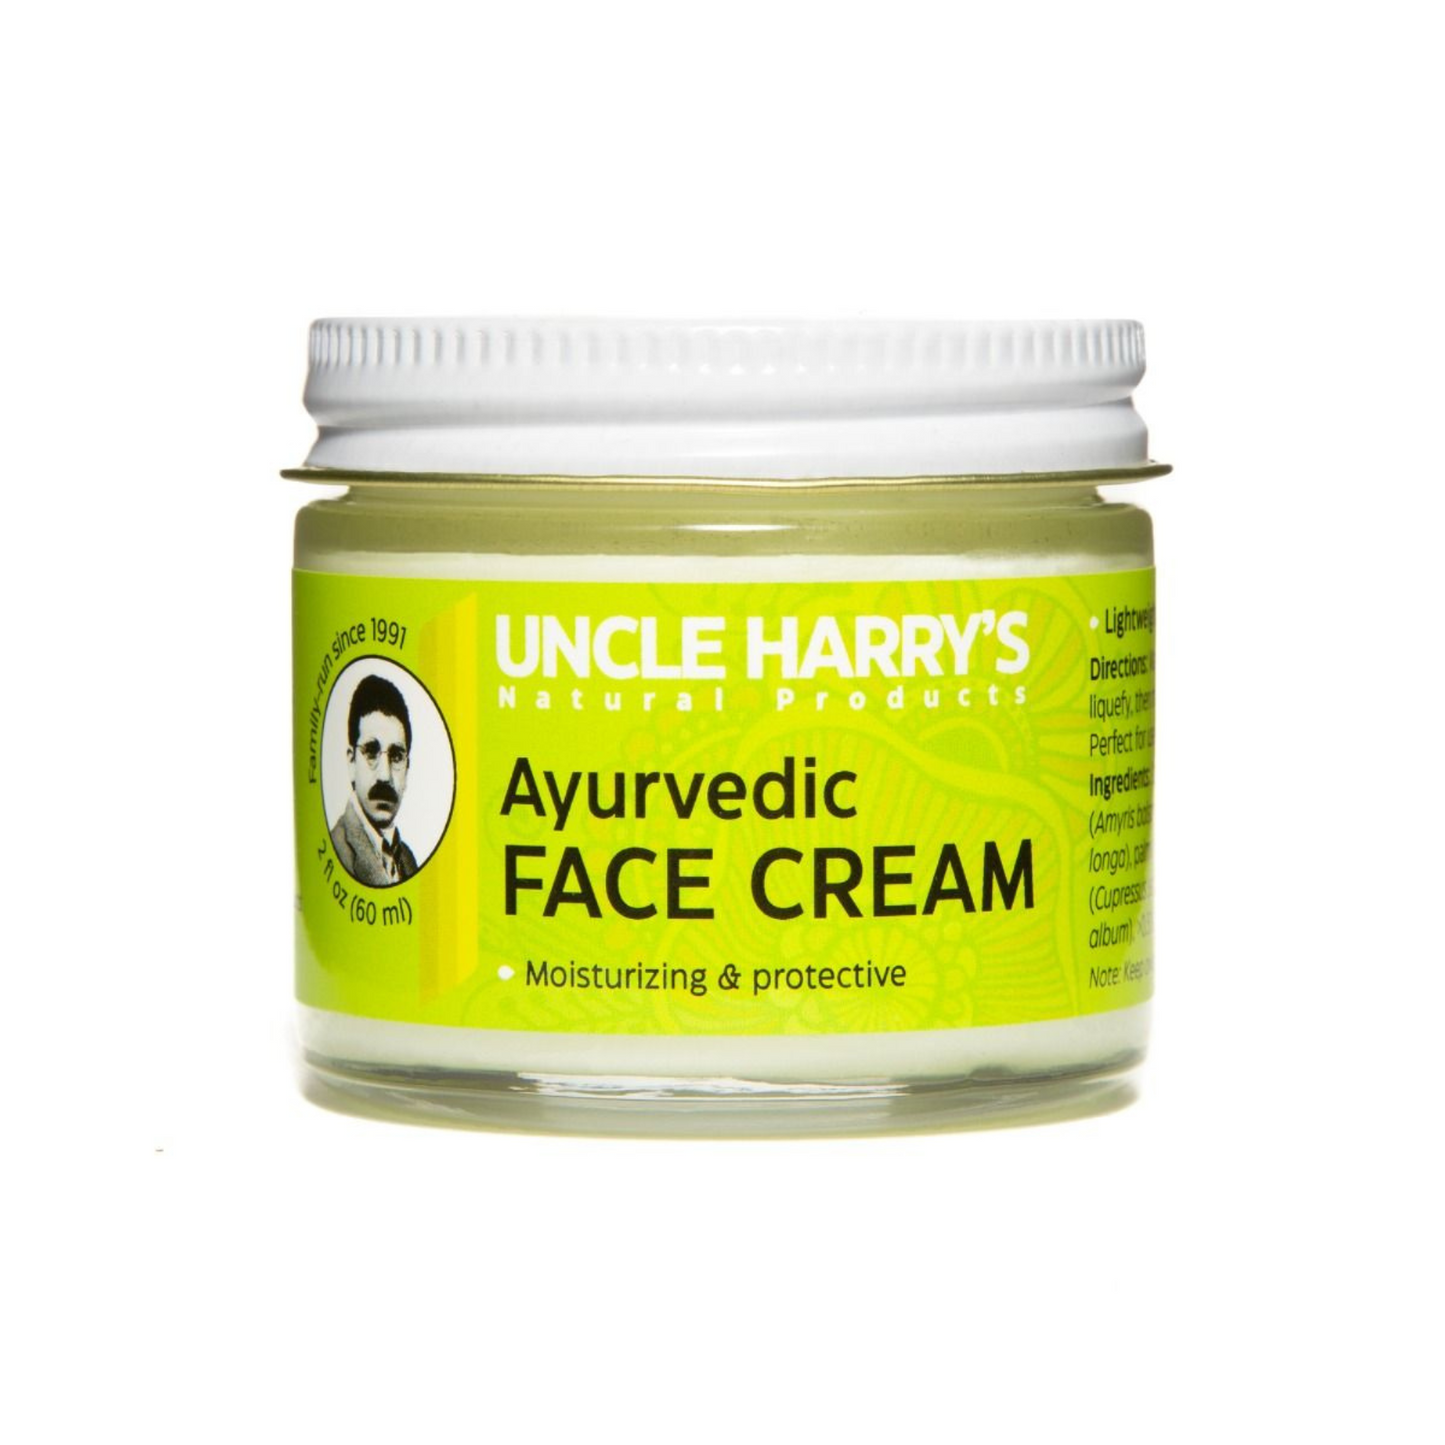 Primary Image of Ayurvedic Face Cream